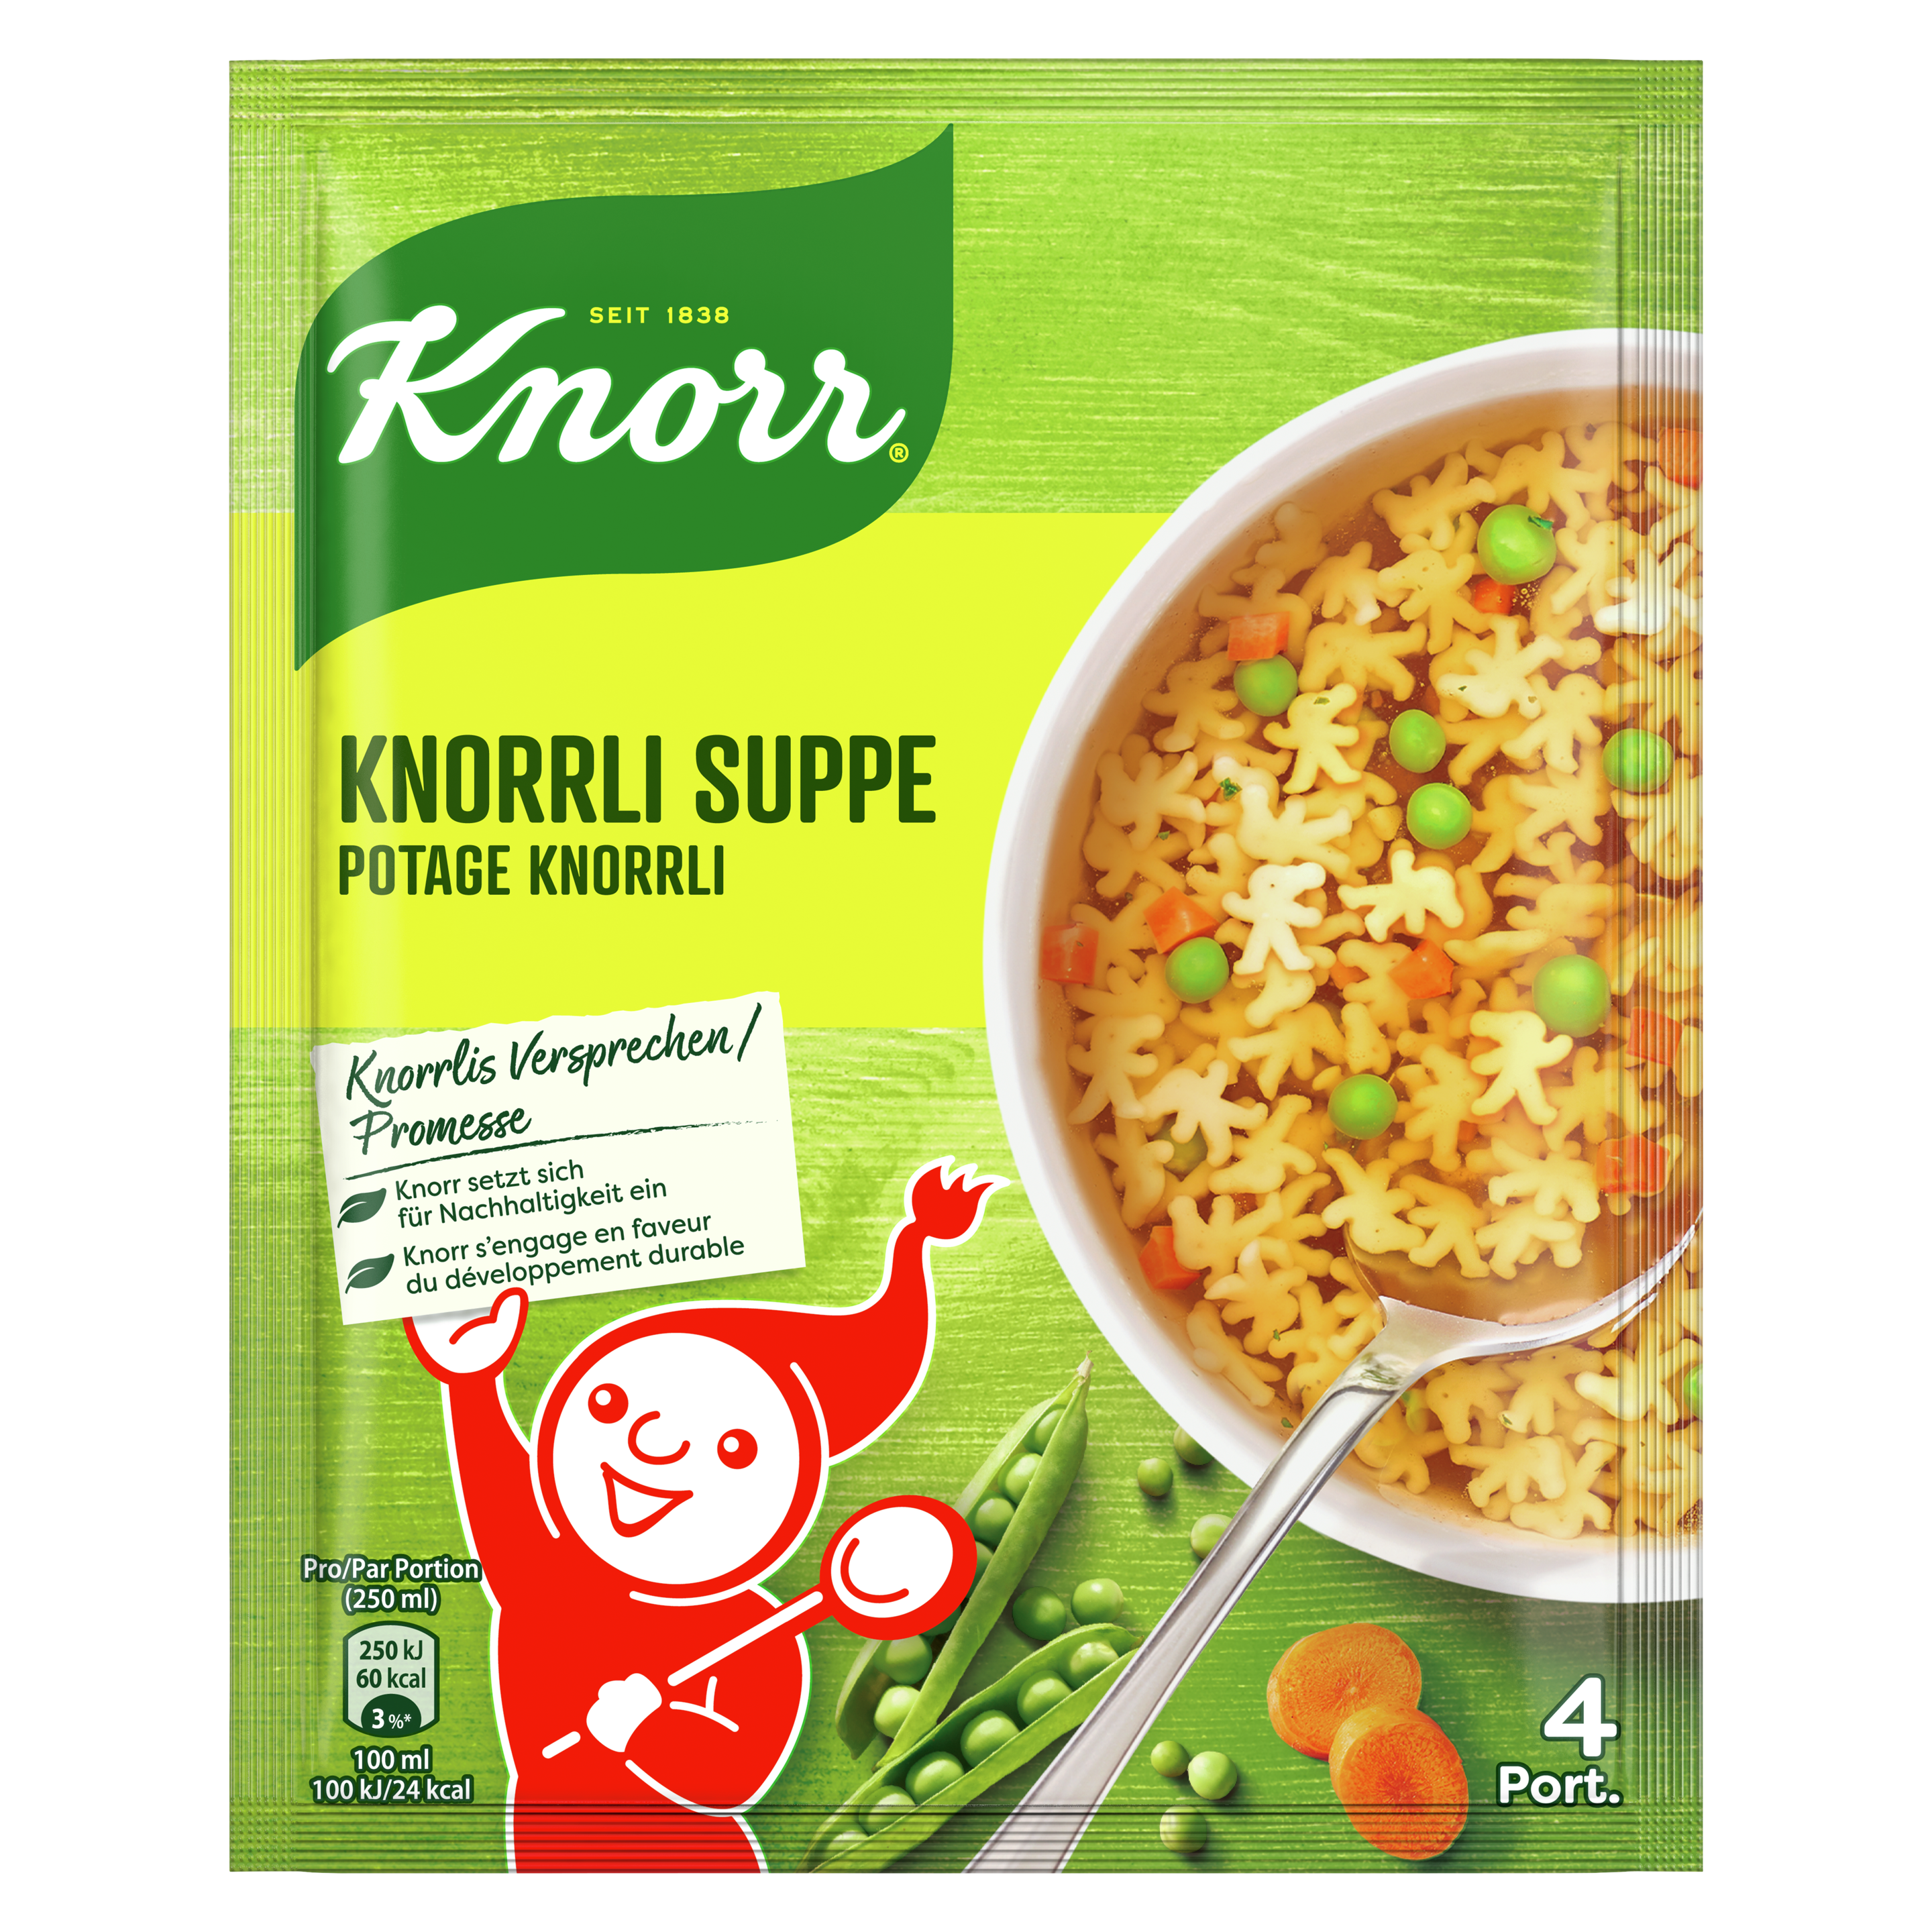 KNORR Knorrli Suppe Beutel 4 Portionen